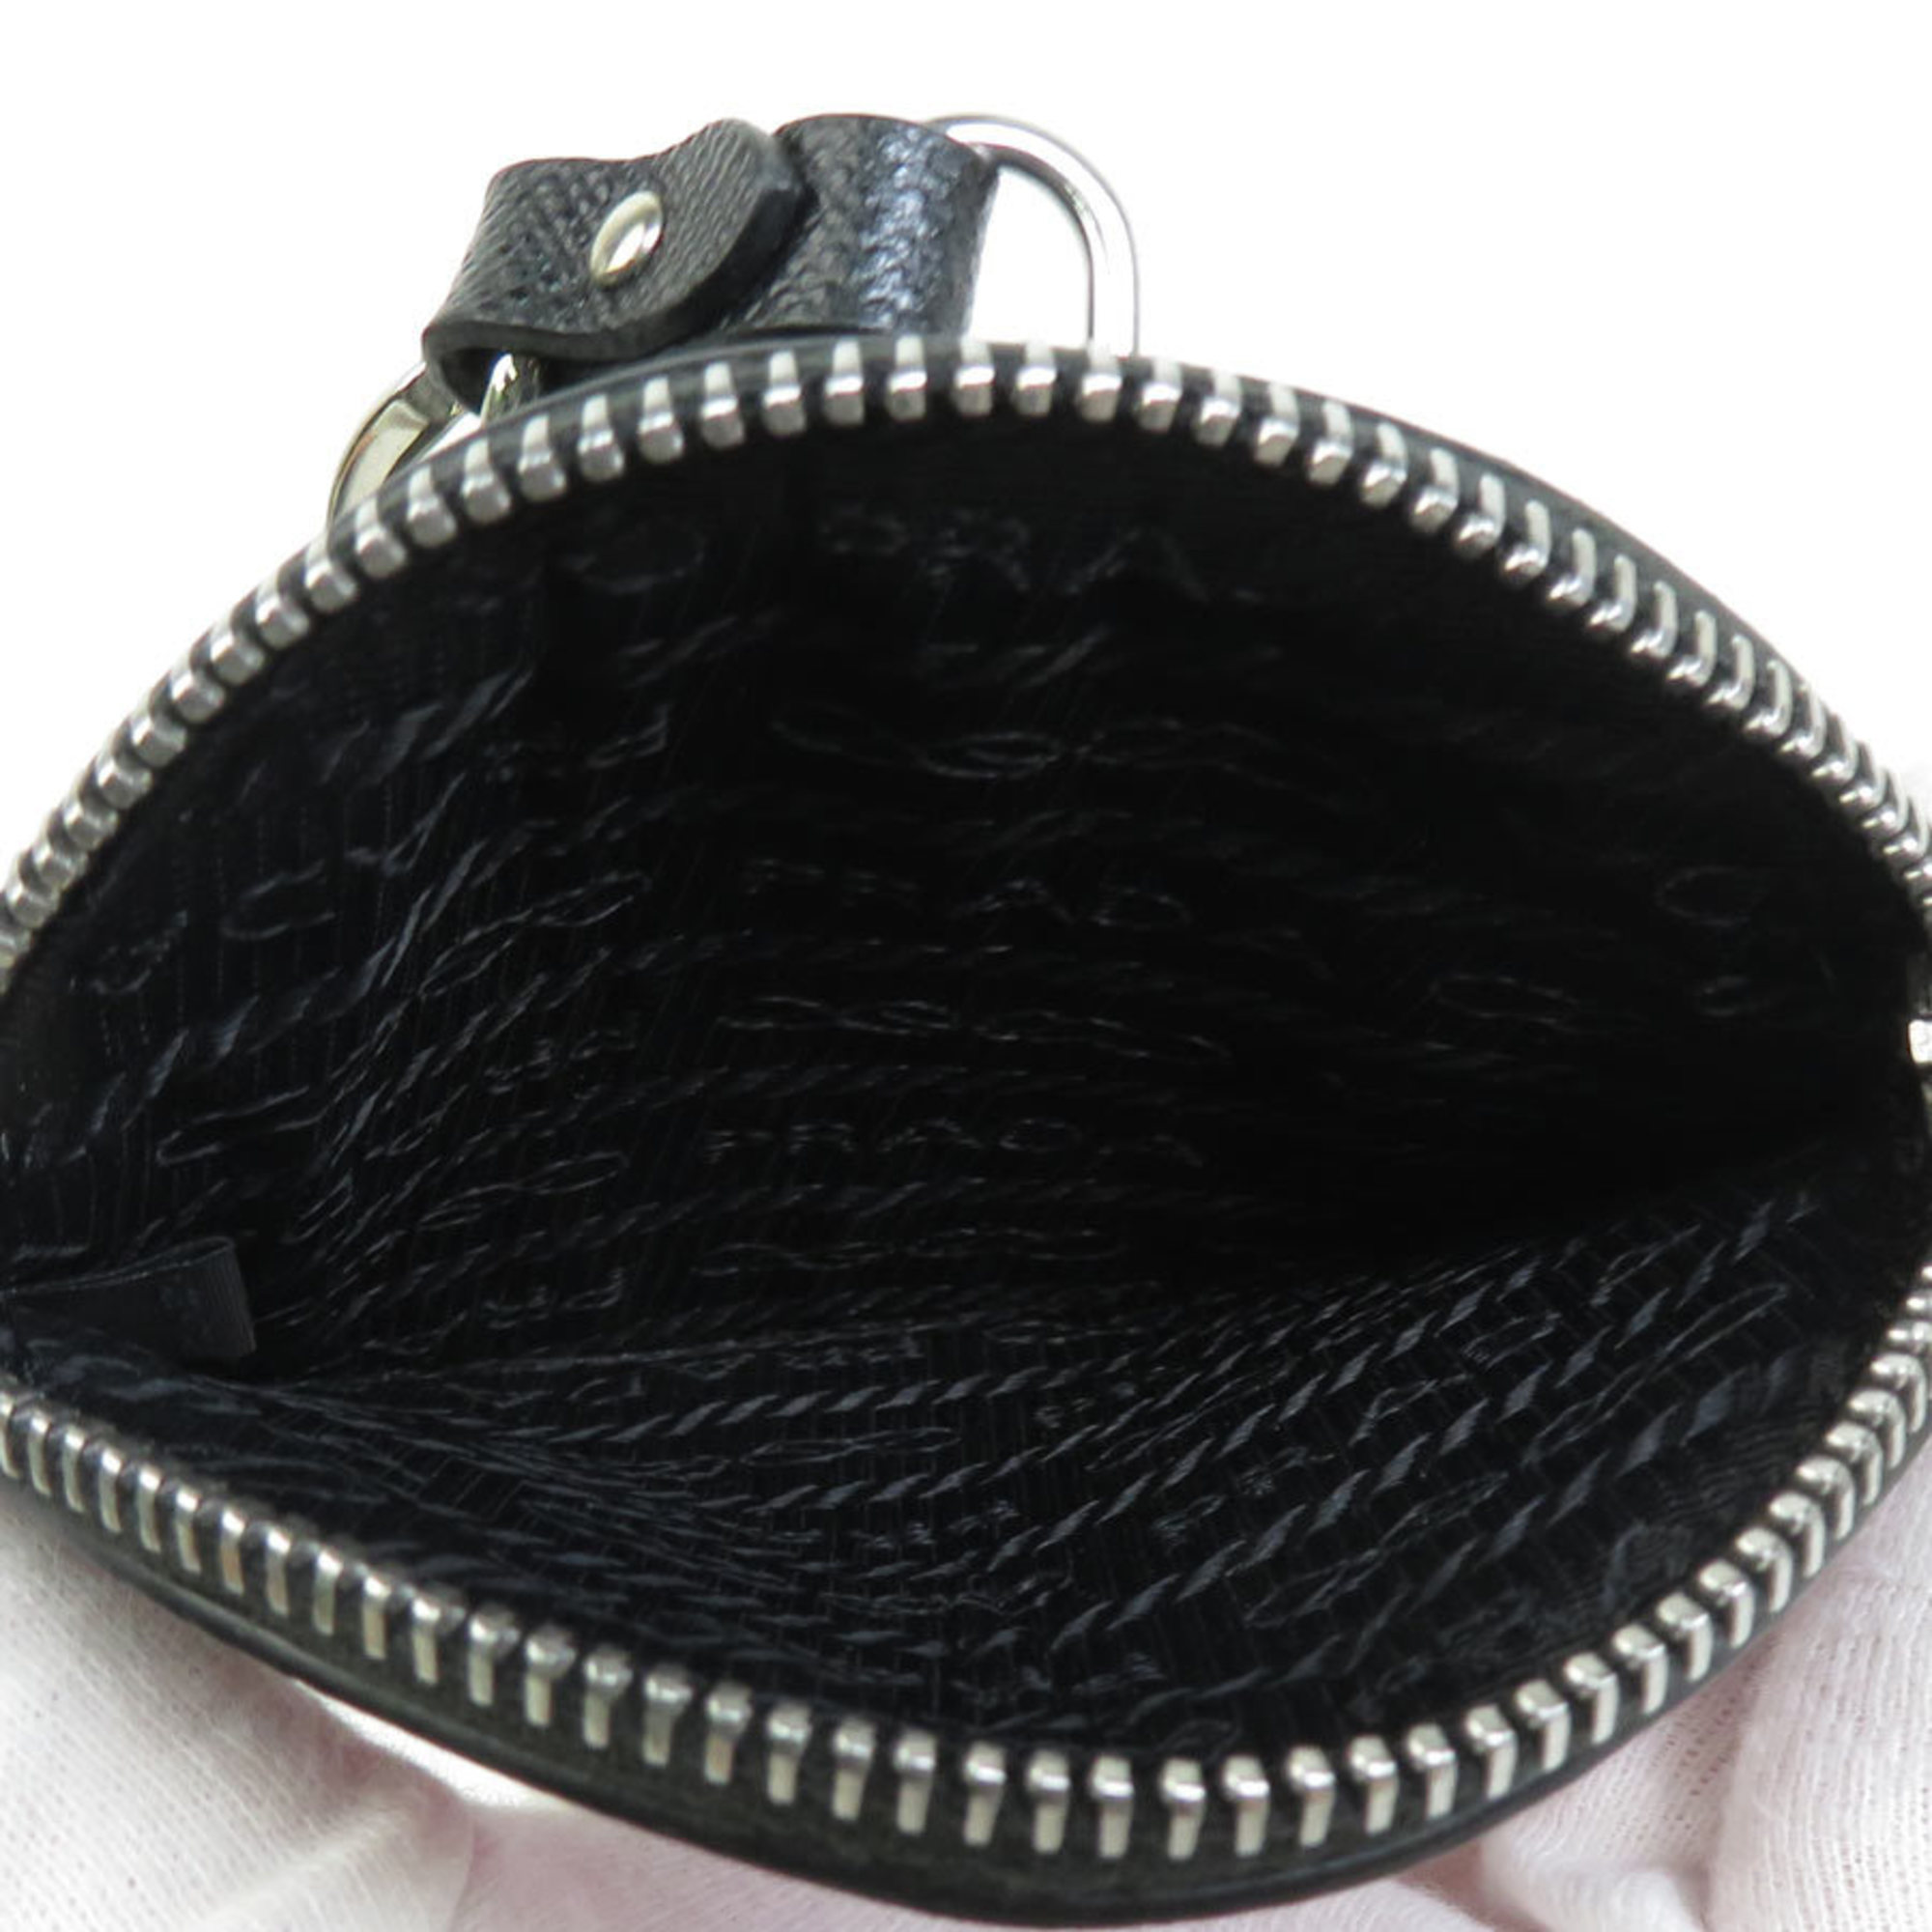 Prada PRADA coin case wallet leather black x pink series silver unisex 2TL389